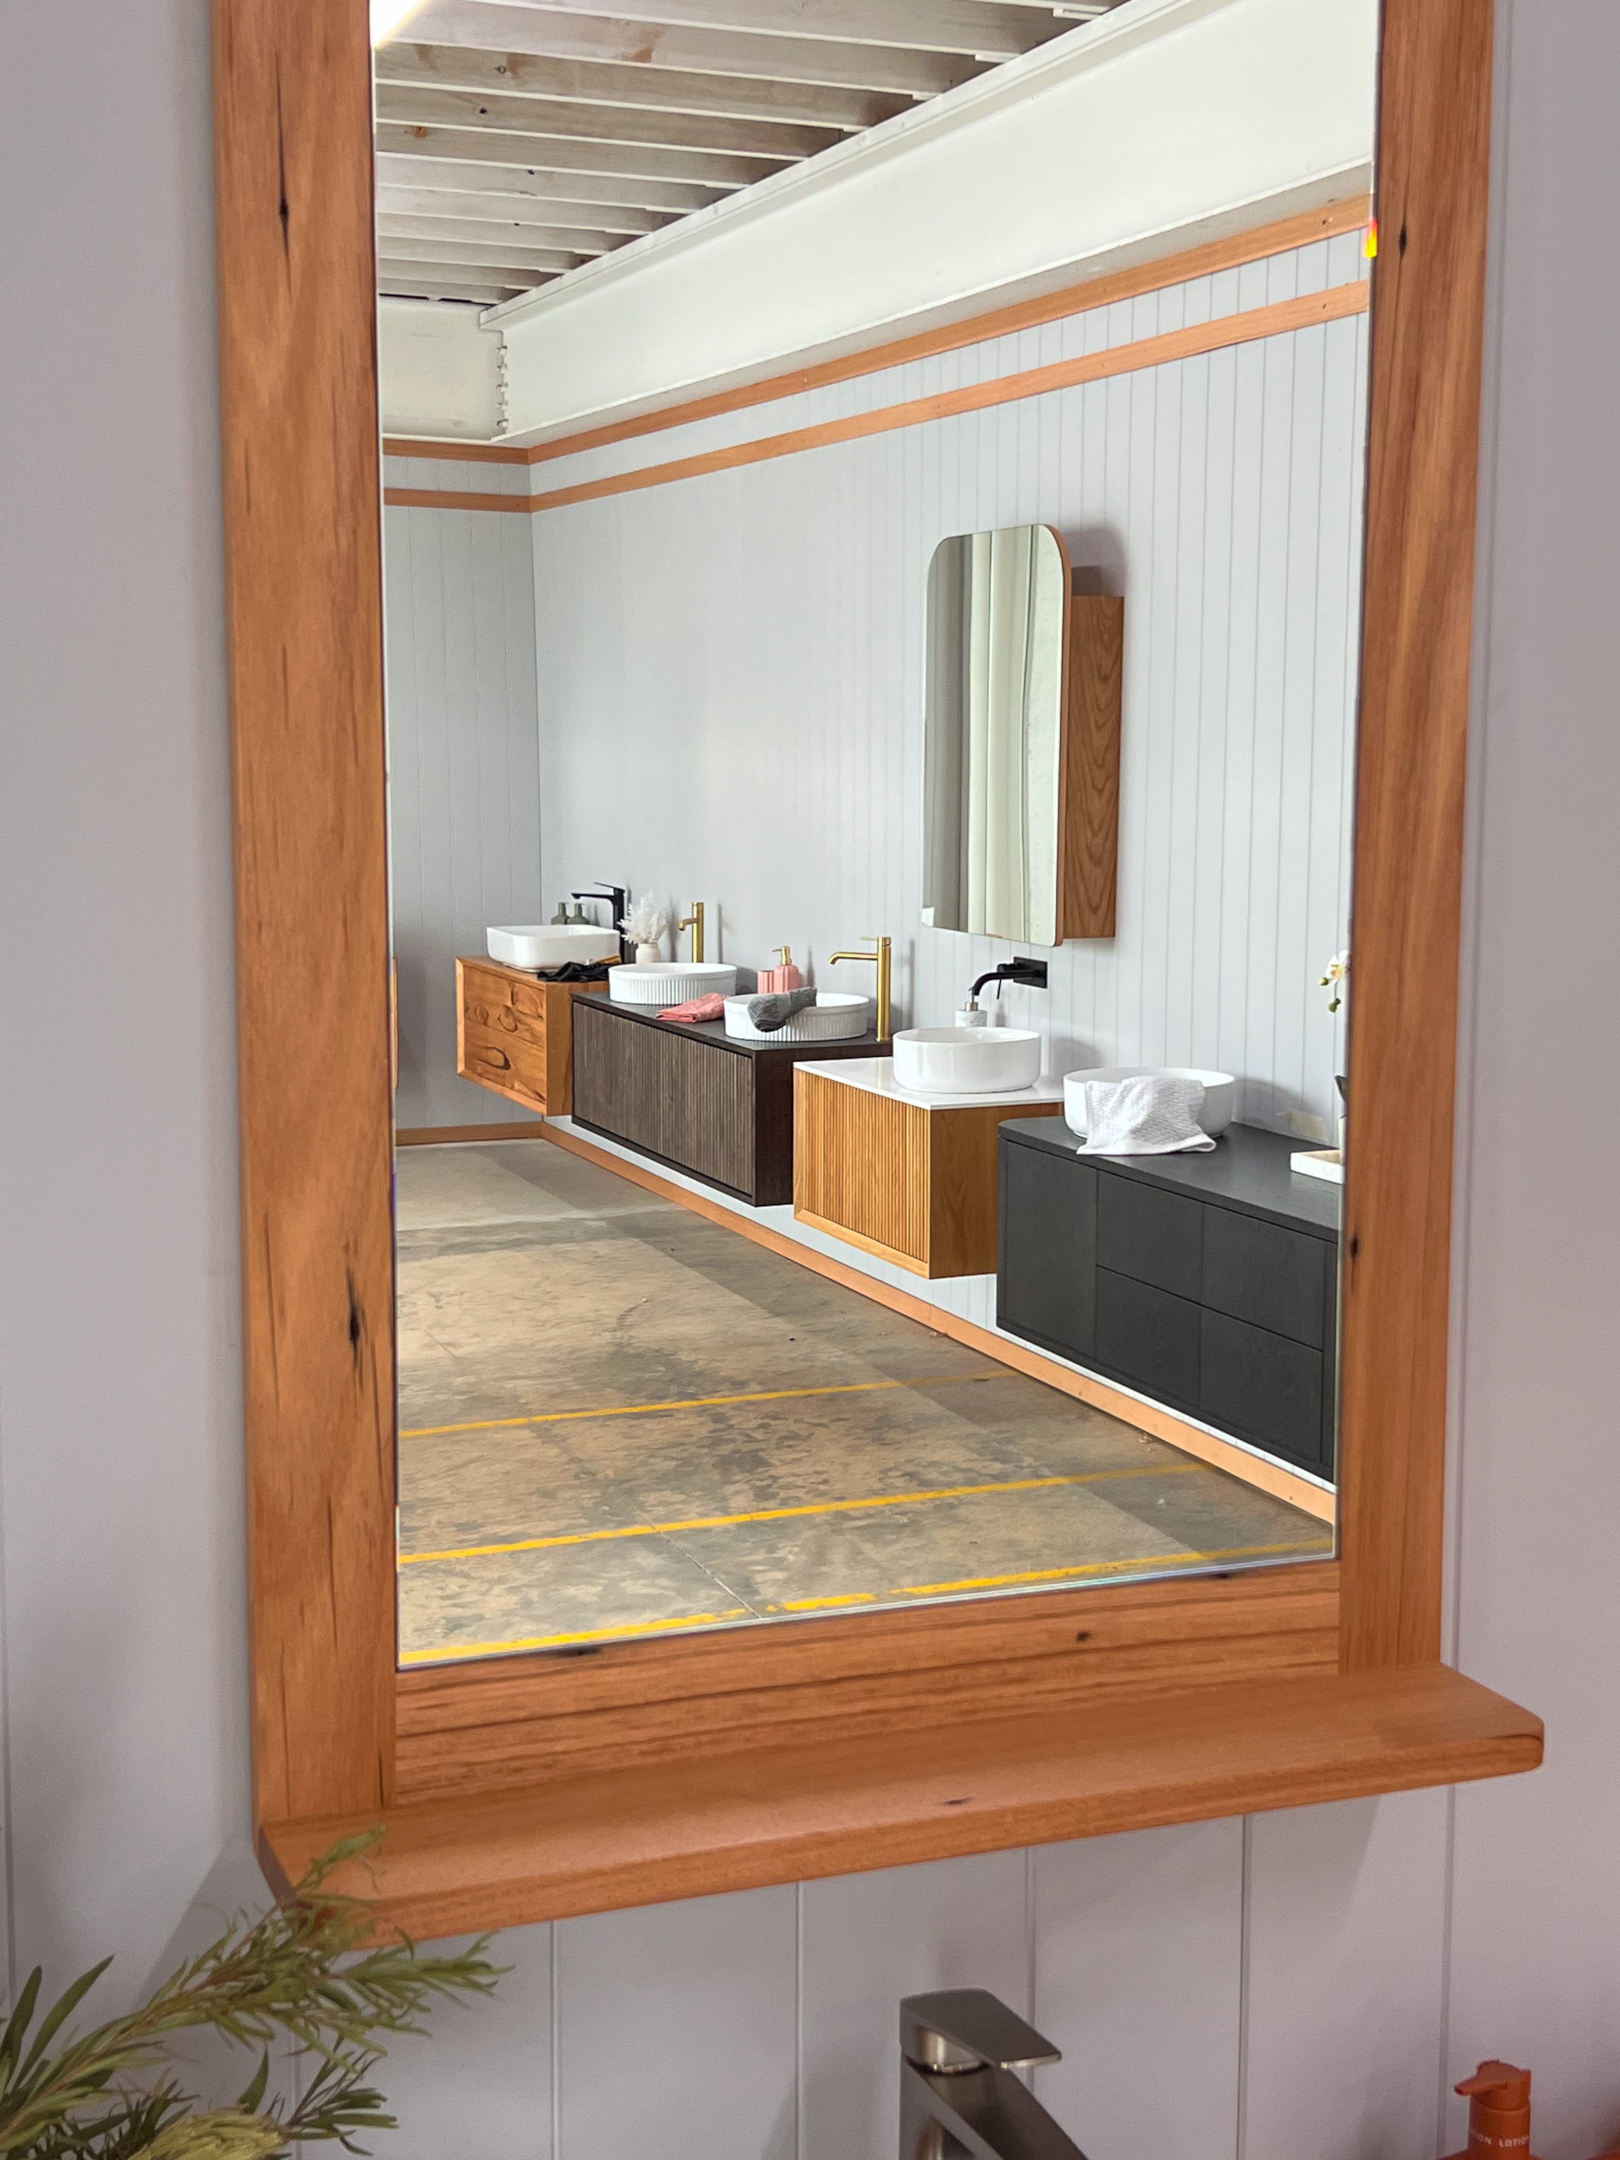 A beautiful image of timber vanities showcasing popular wood choices for bathroom vanities.